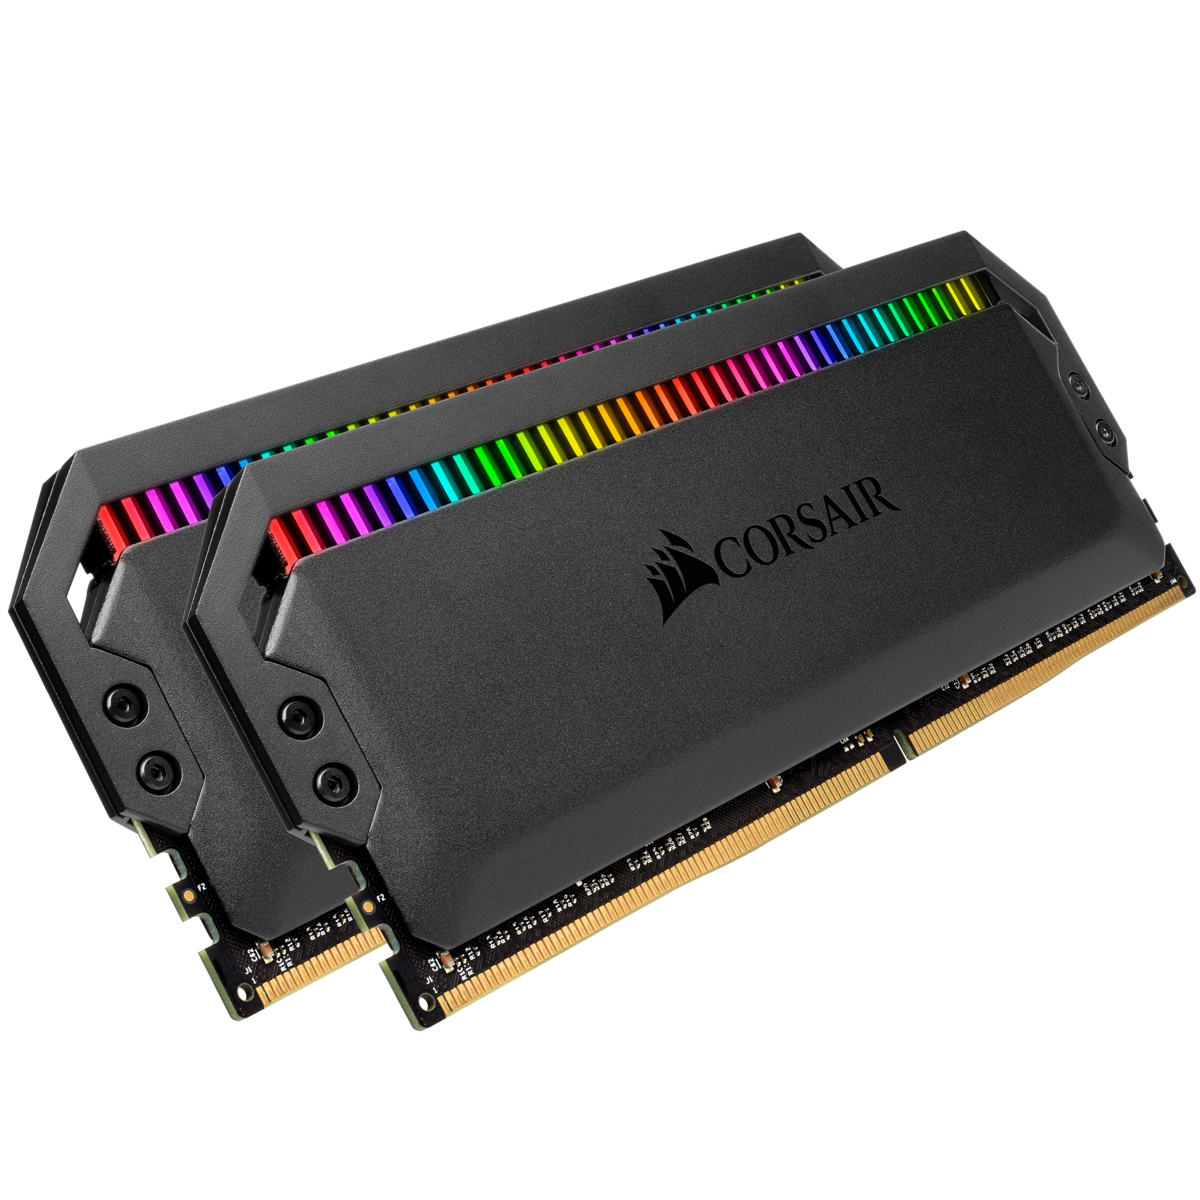 CORSAIR 2x8GB,1.35V, Dominator Platinum RGB GB 16 Hsp DDR4 Speicher-Kit Black